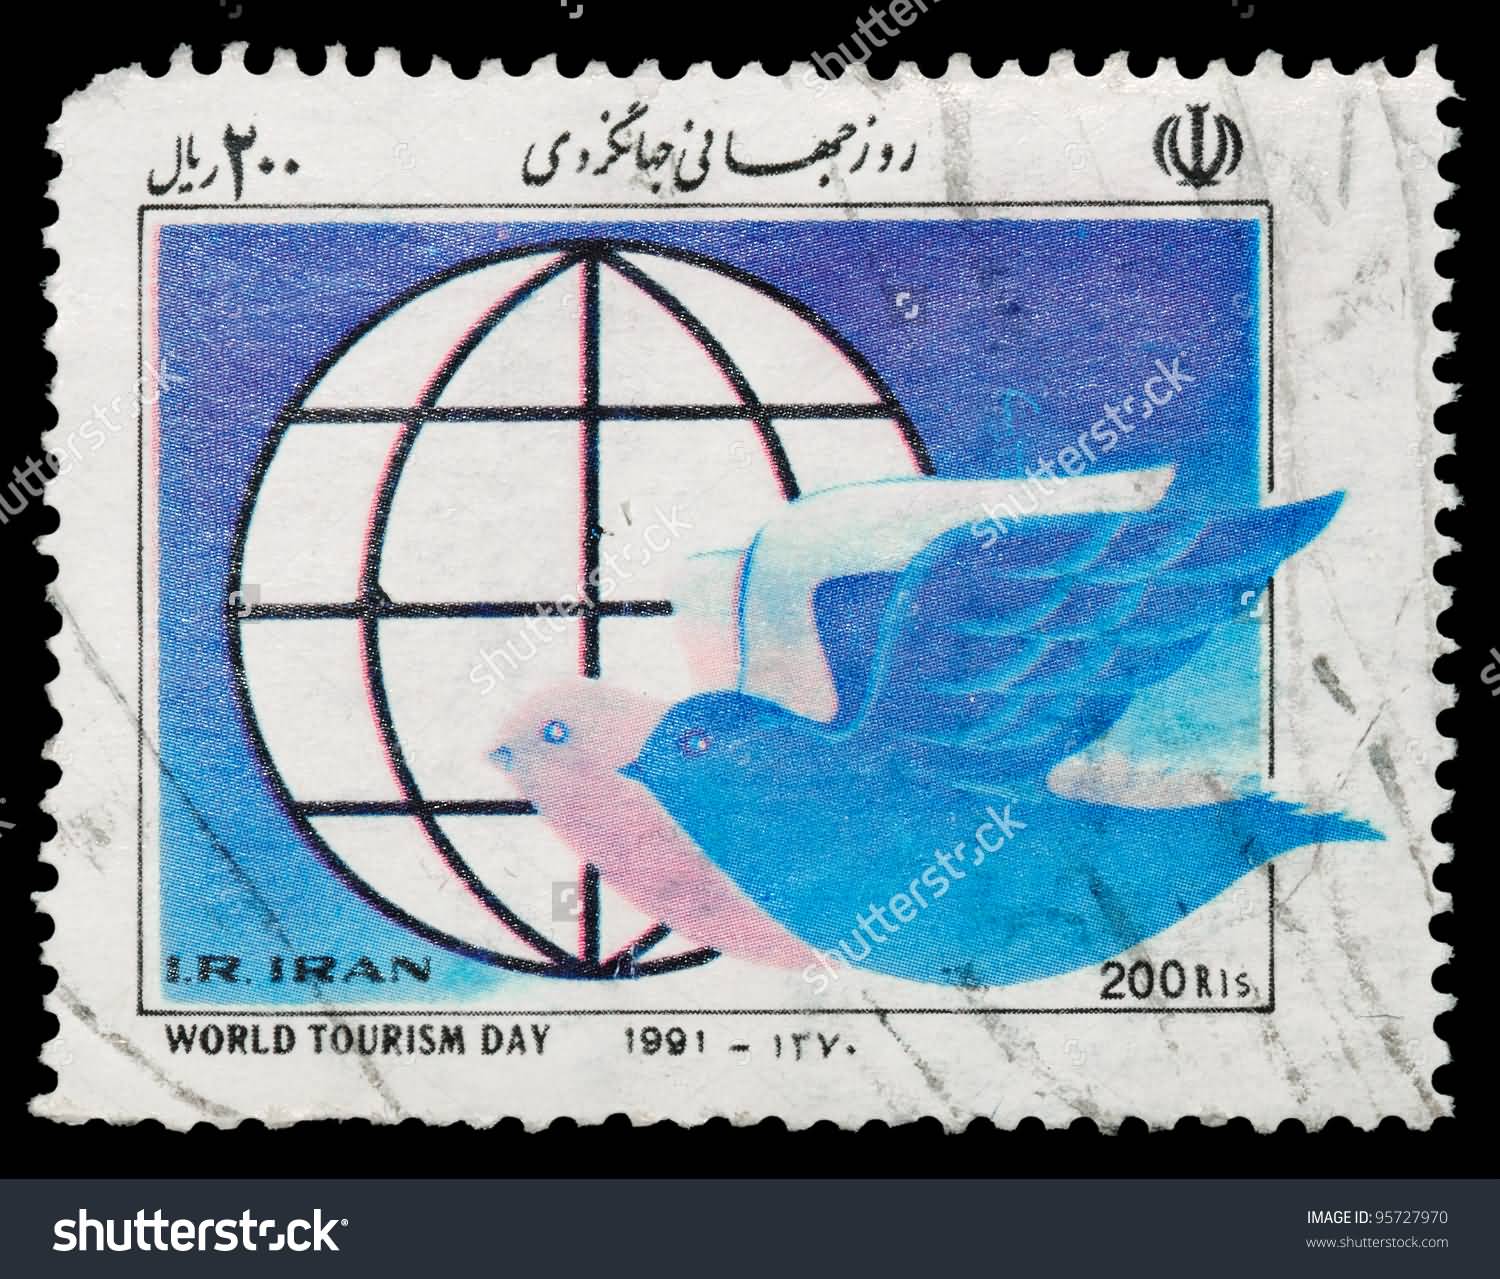 World Tourism Day Postal Stamp Of Iran